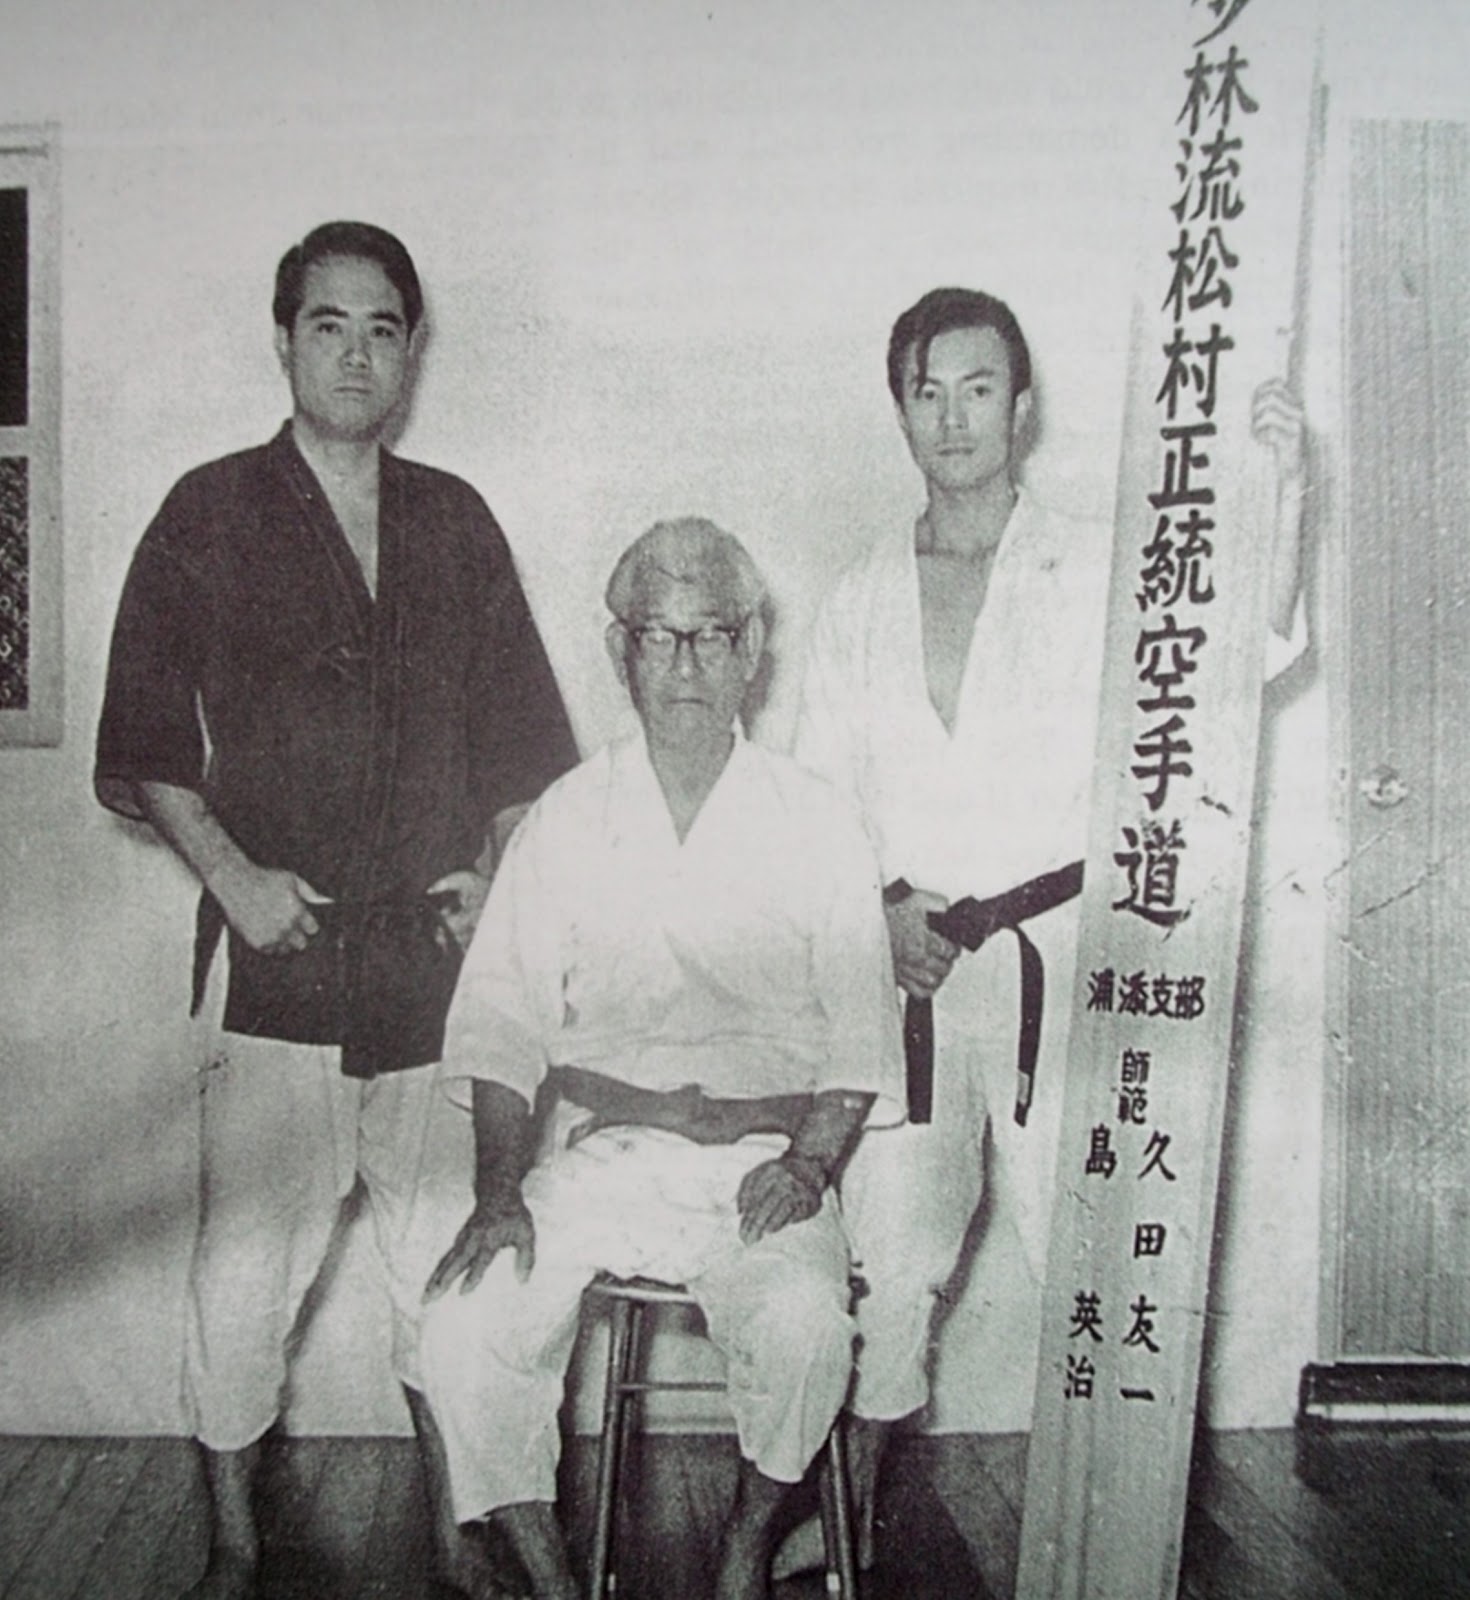 Ryukyu Martial Arts: My Background In The Ryukyu Martial Arts